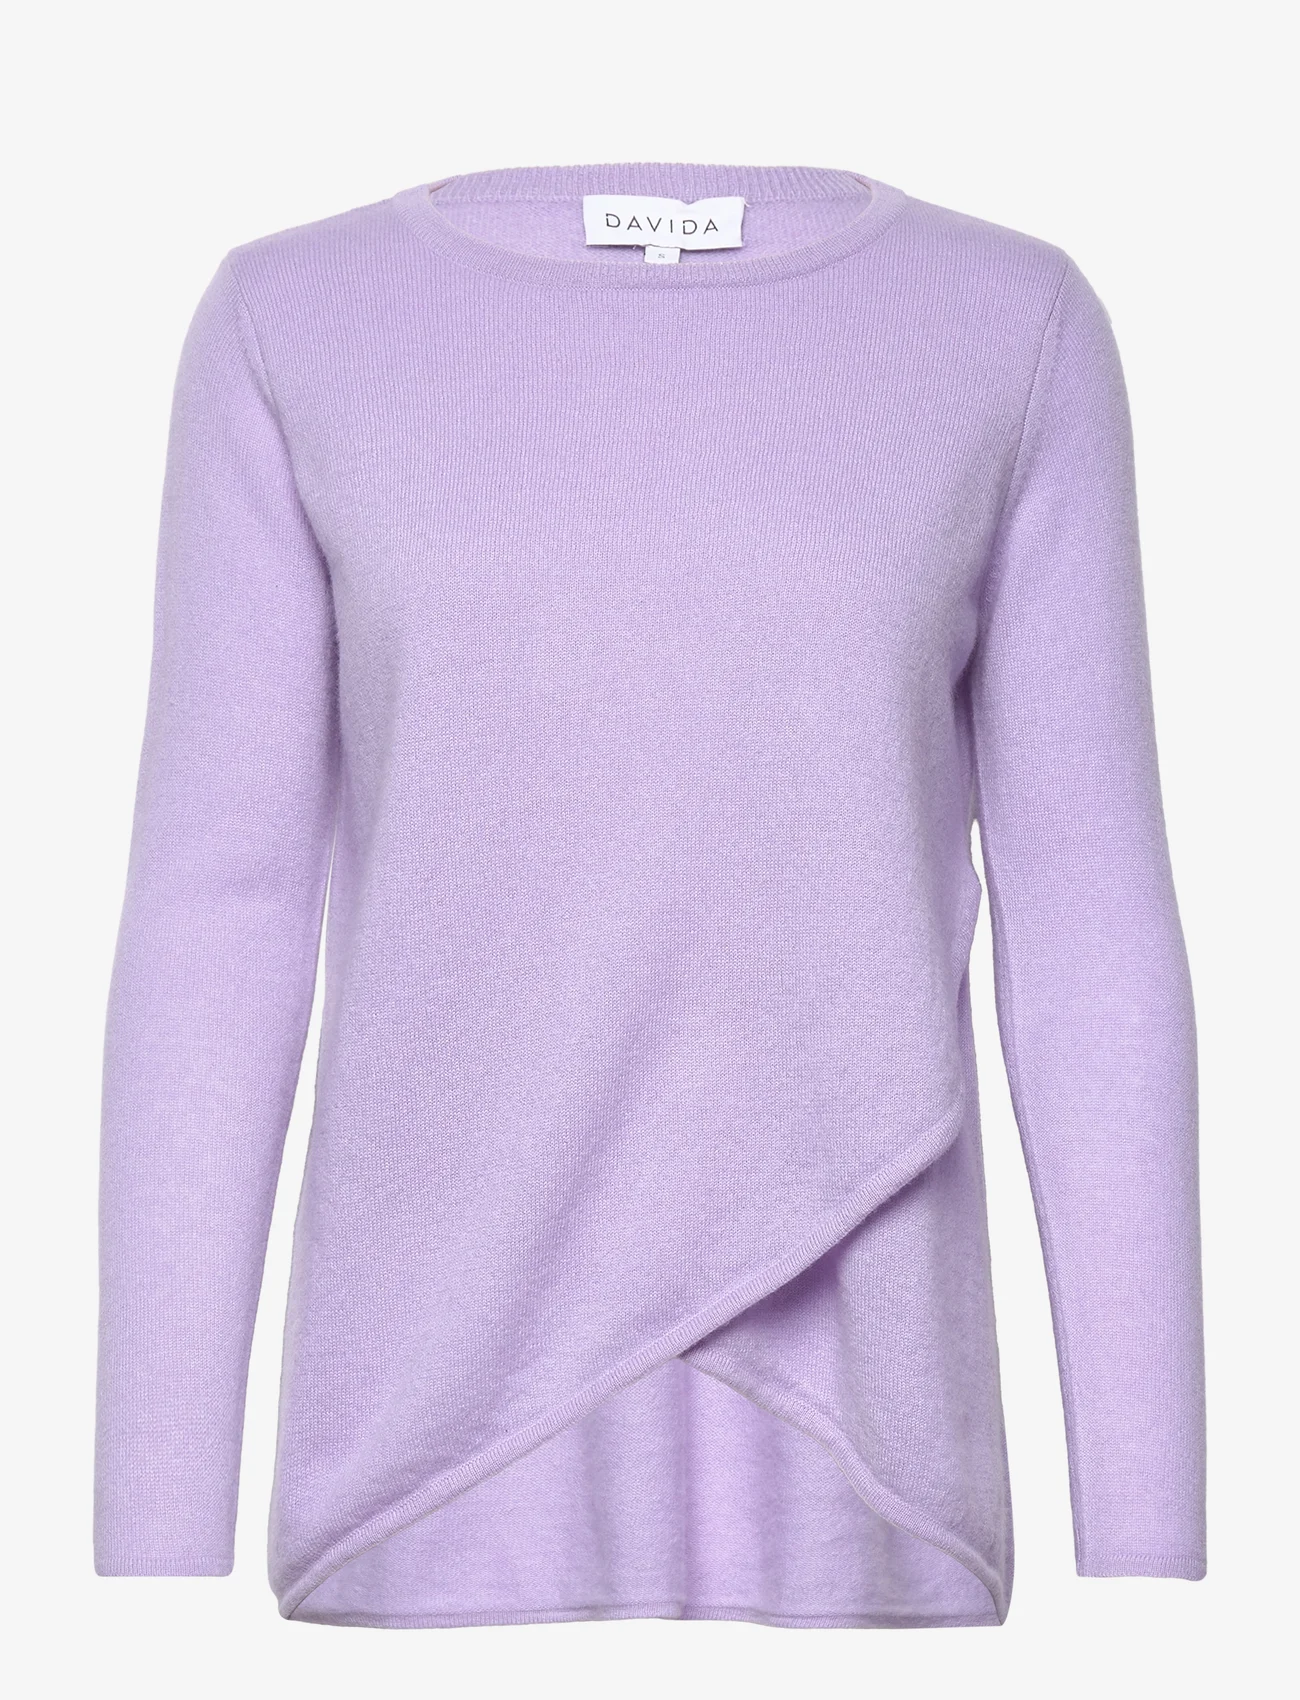 Davida Cashmere - Wrap Front Sweater - lavender - 0